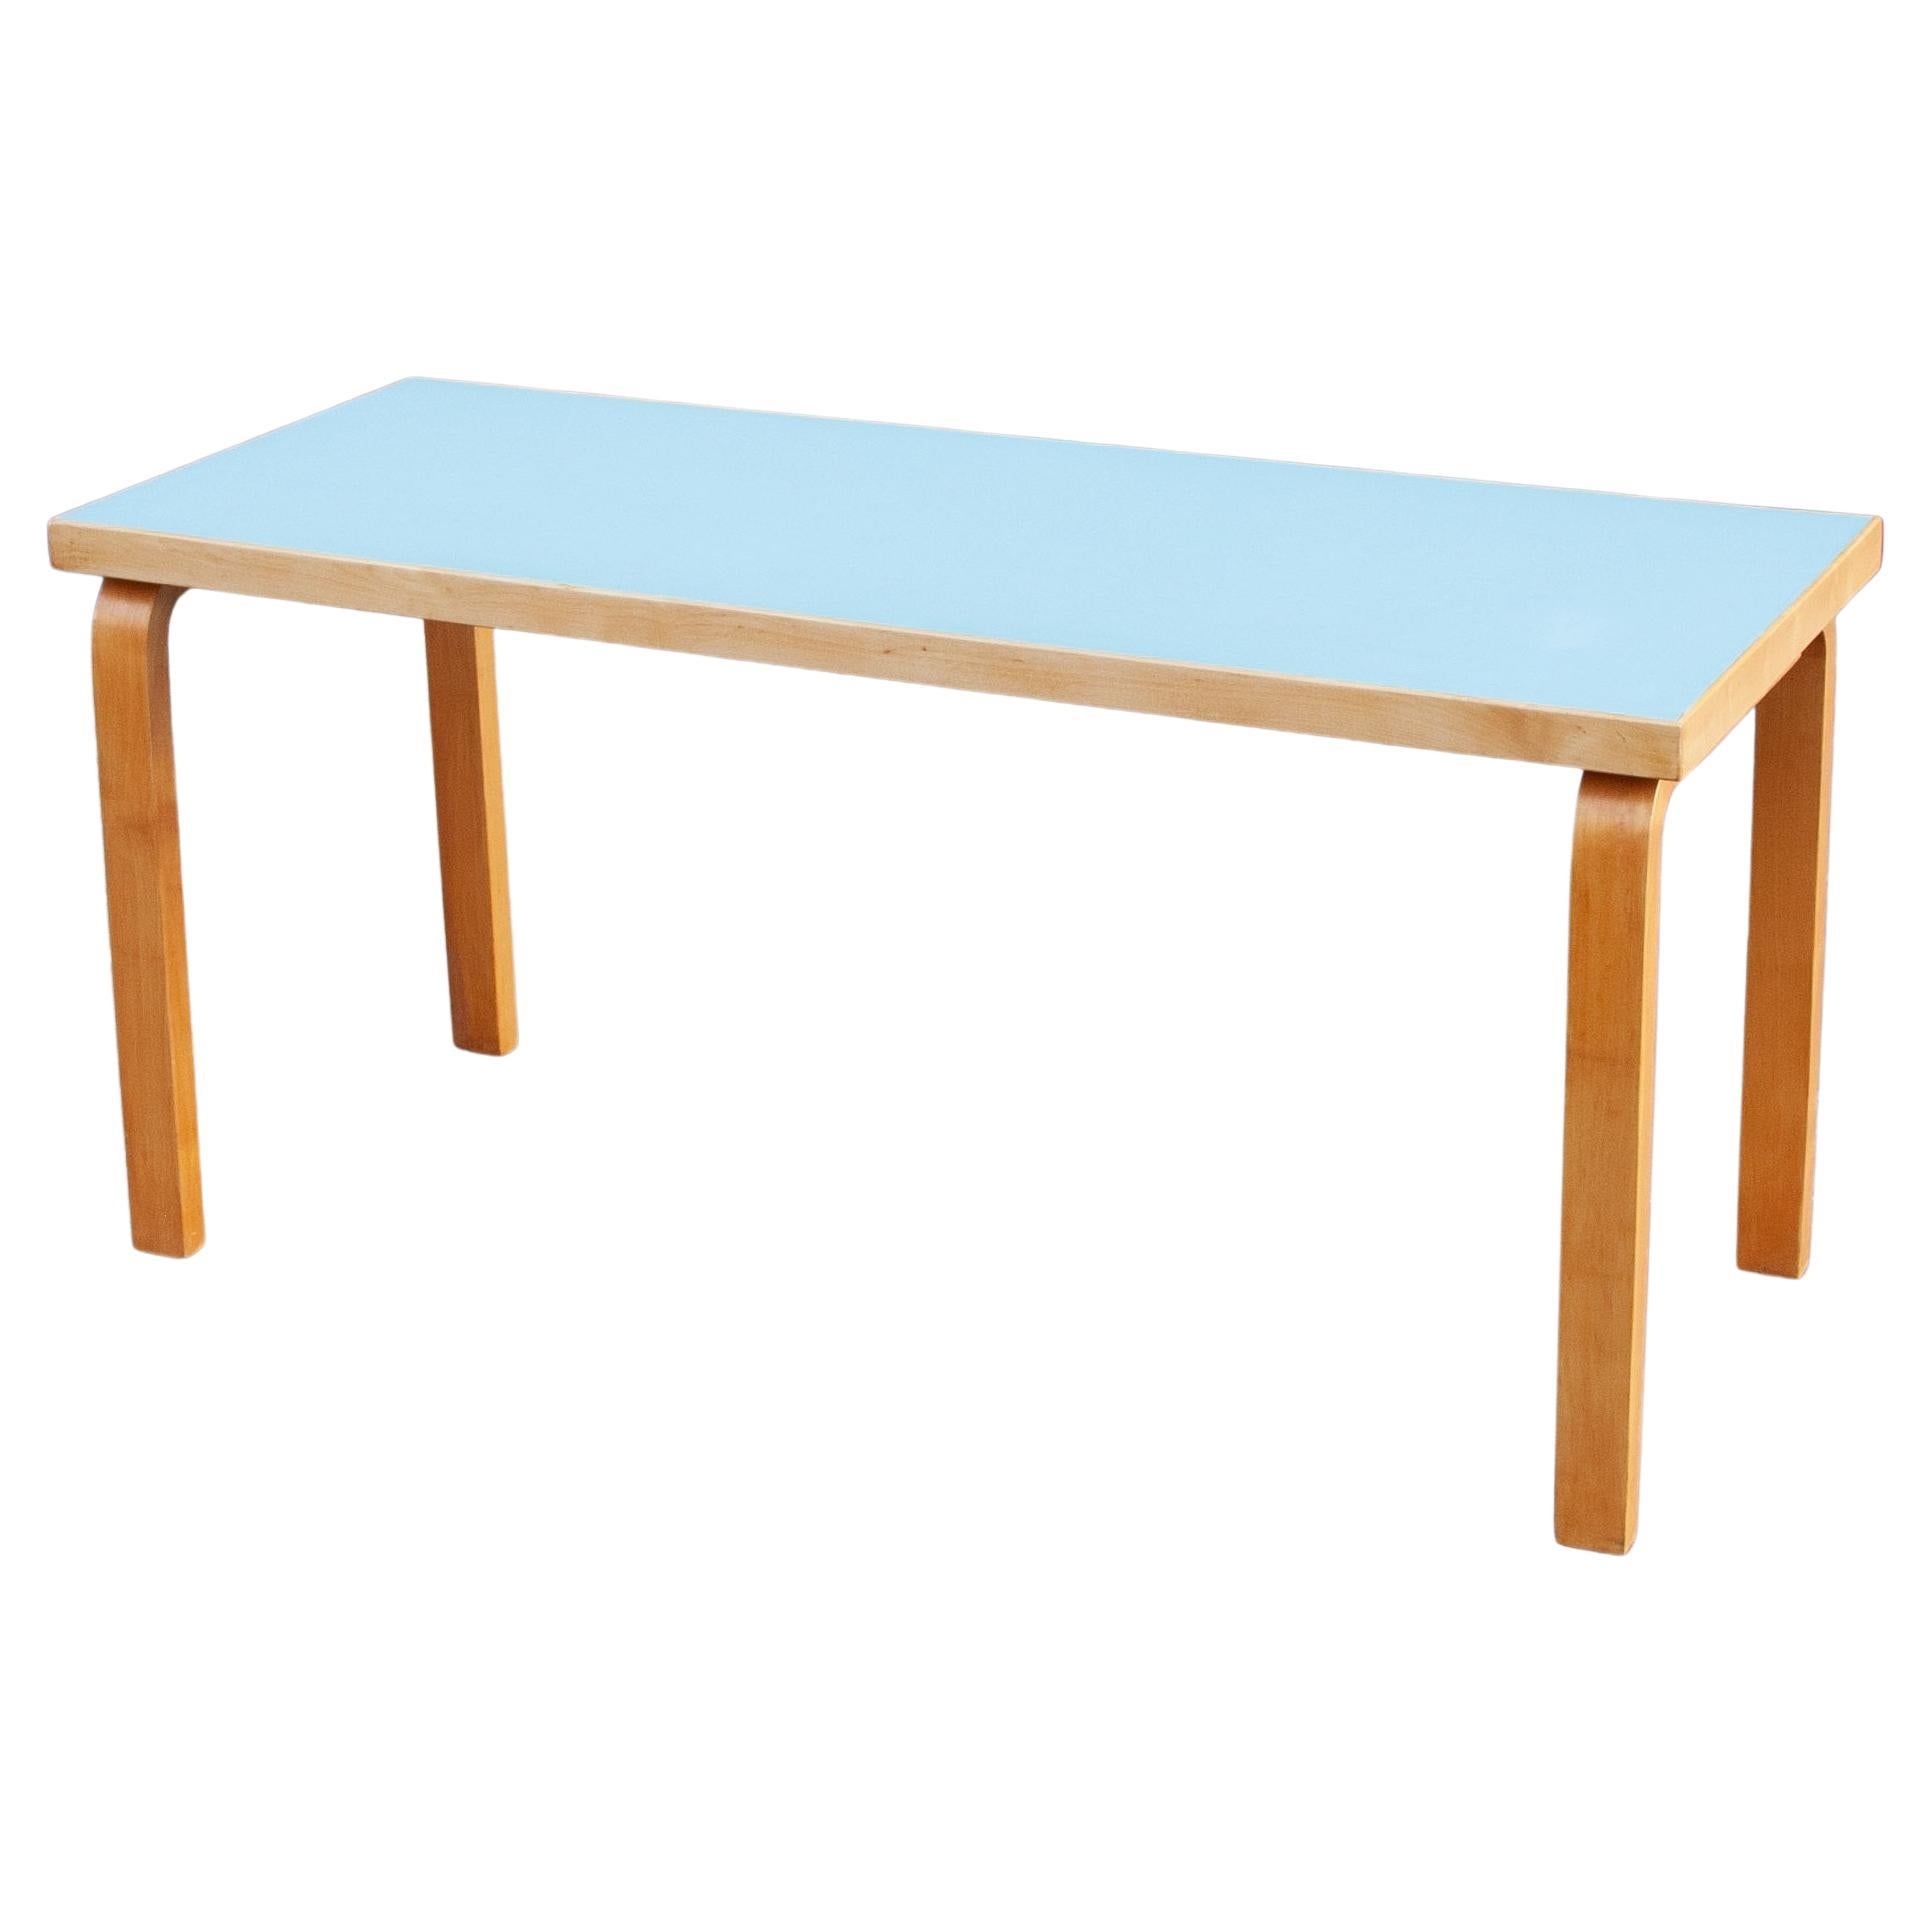 Rare Narrow Alvar Aalto Table with Lino Top